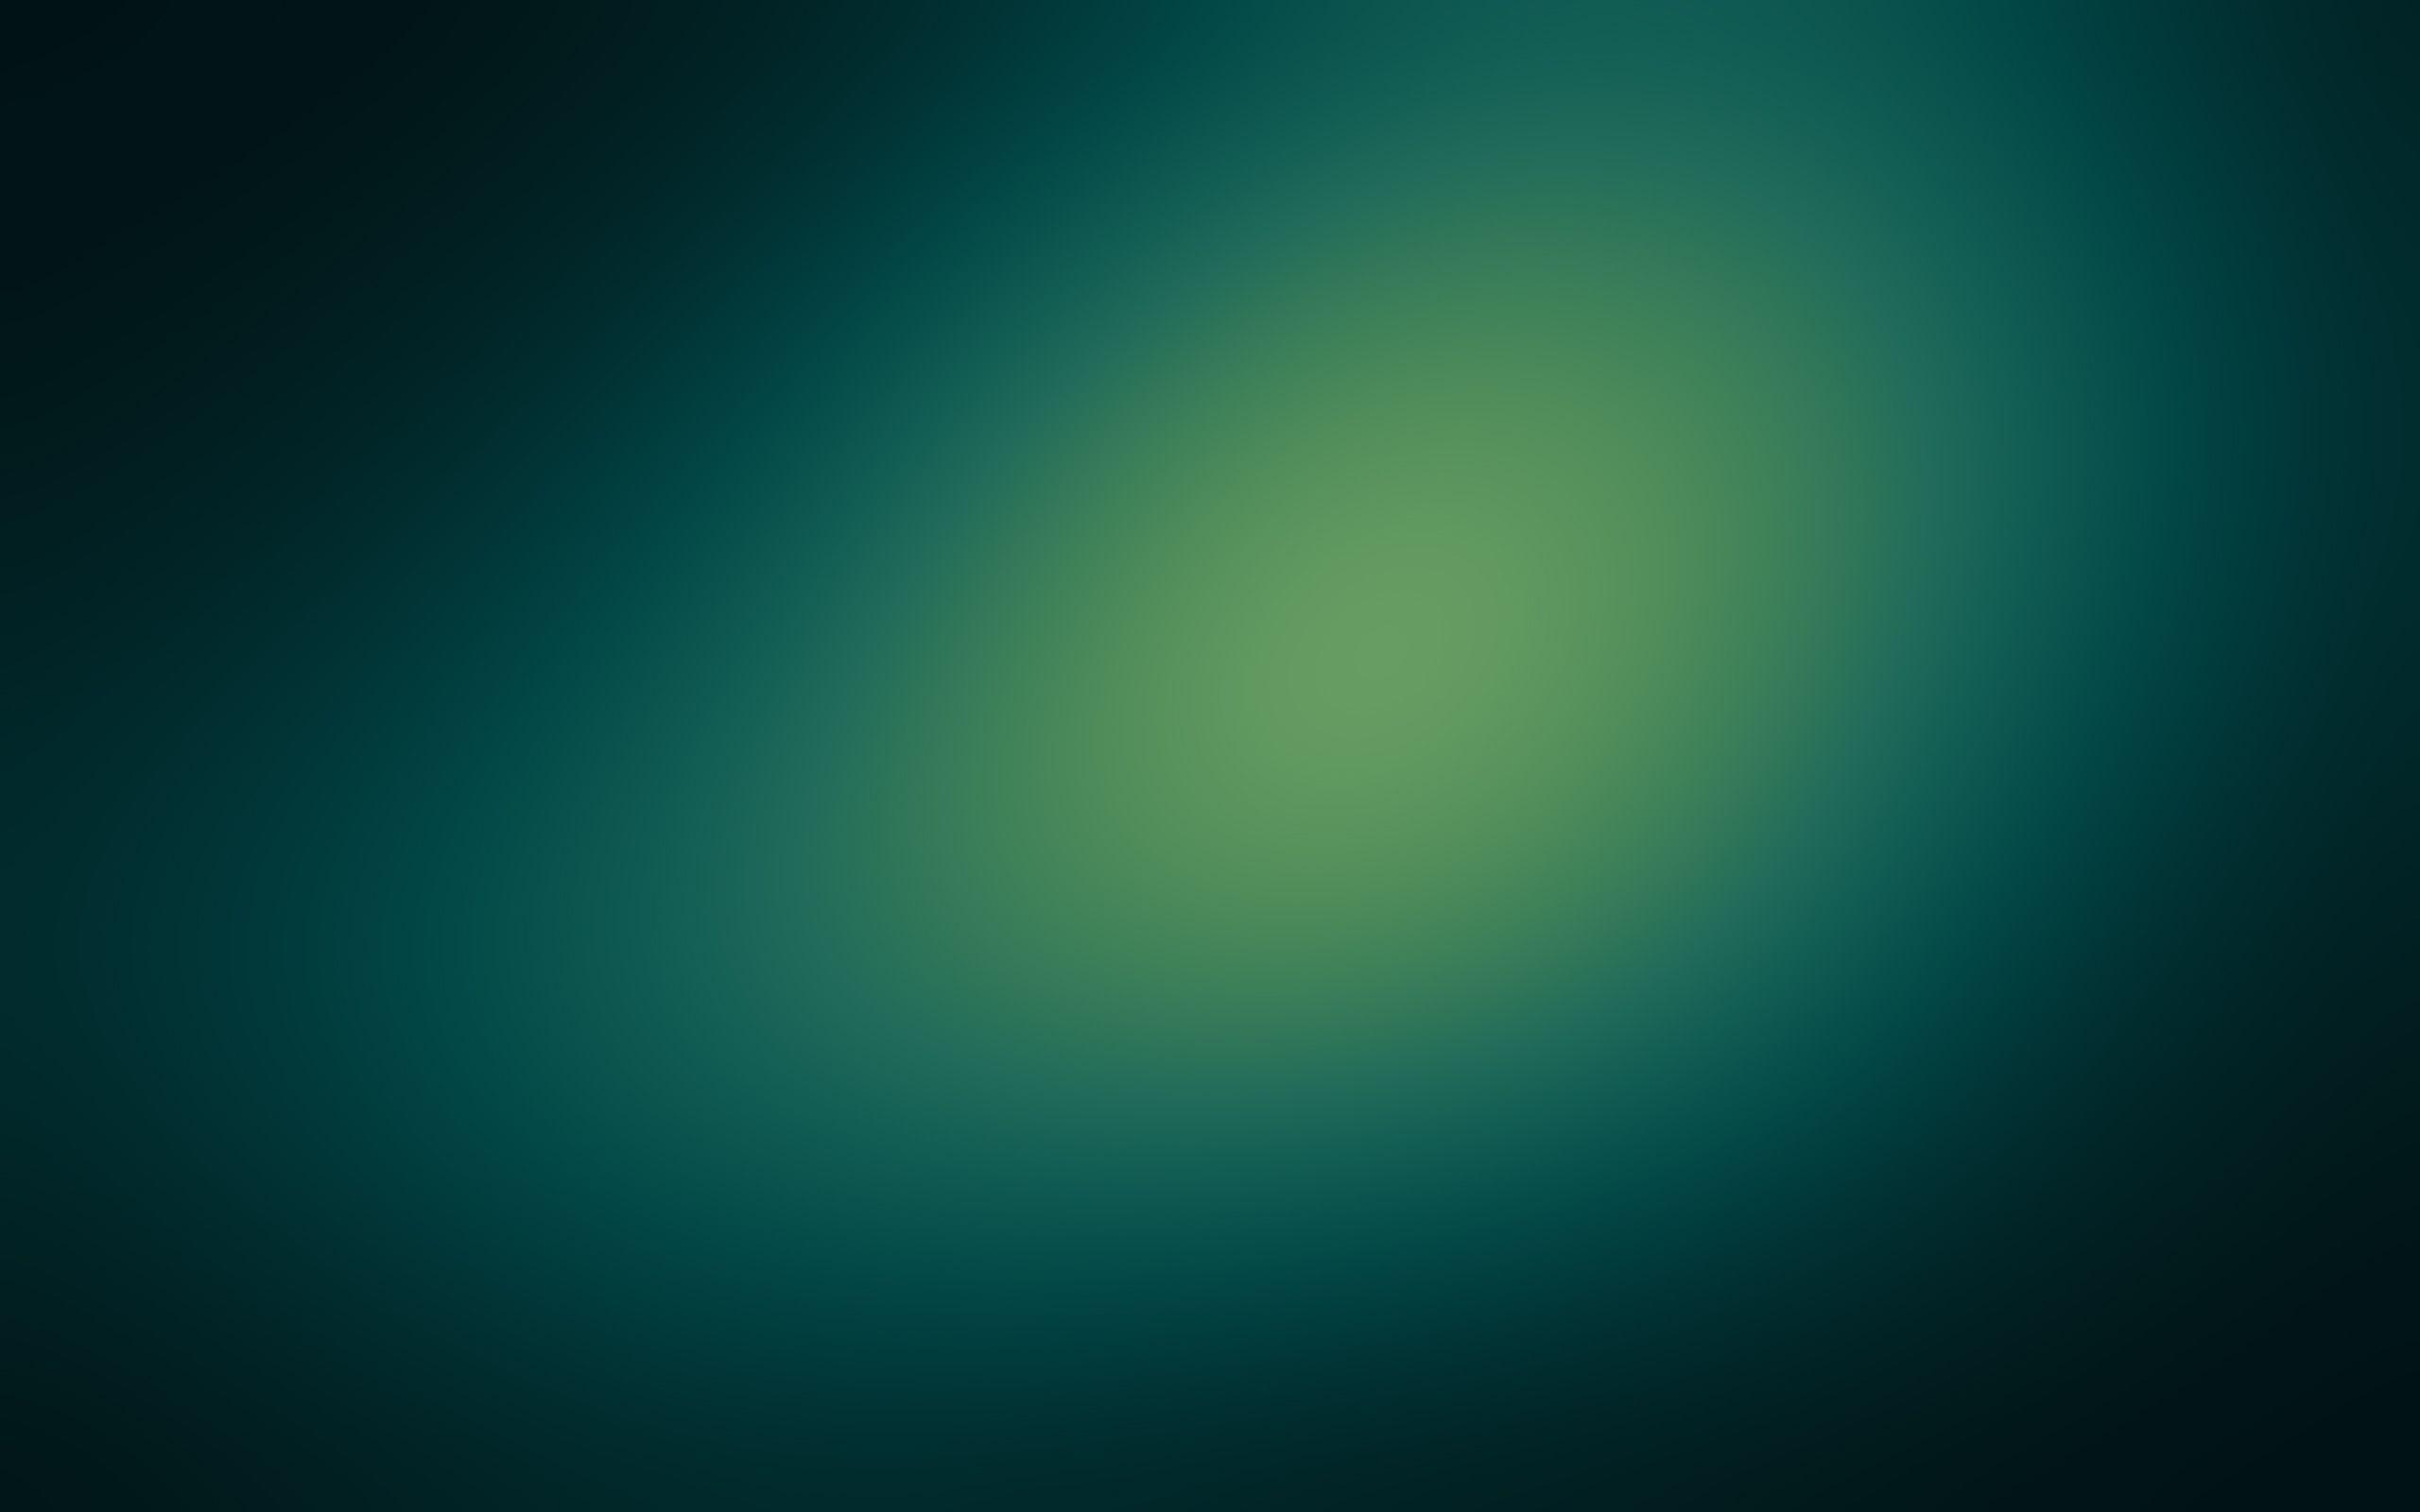 Dark Green Plain Wallpapers - Top Free Dark Green Plain Backgrounds